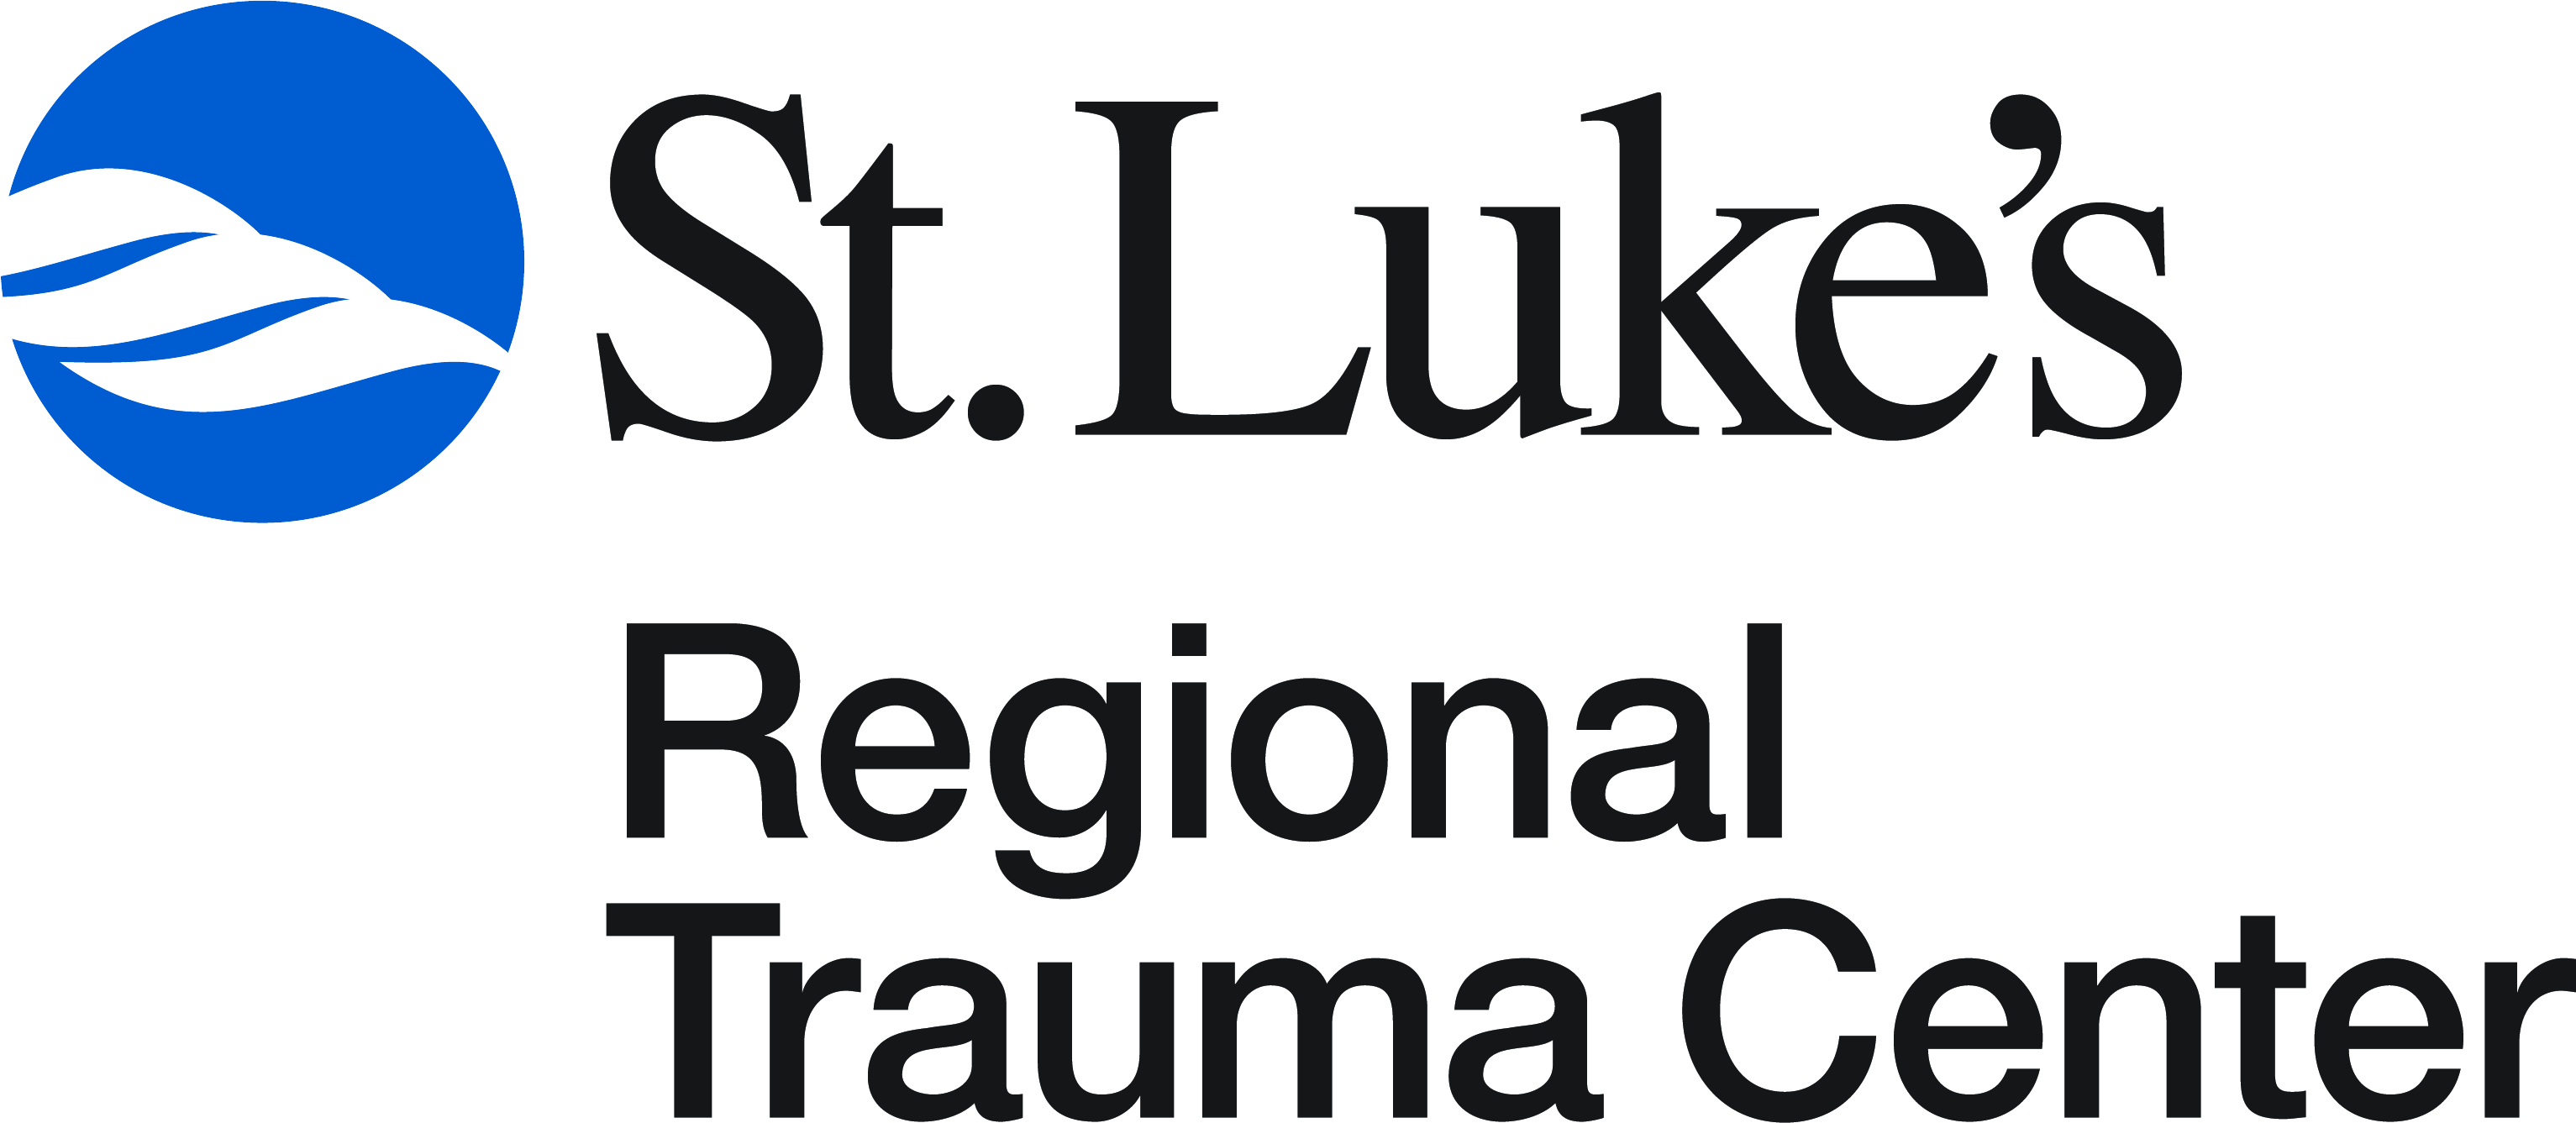 St. Luke’s Regional Trauma Center 